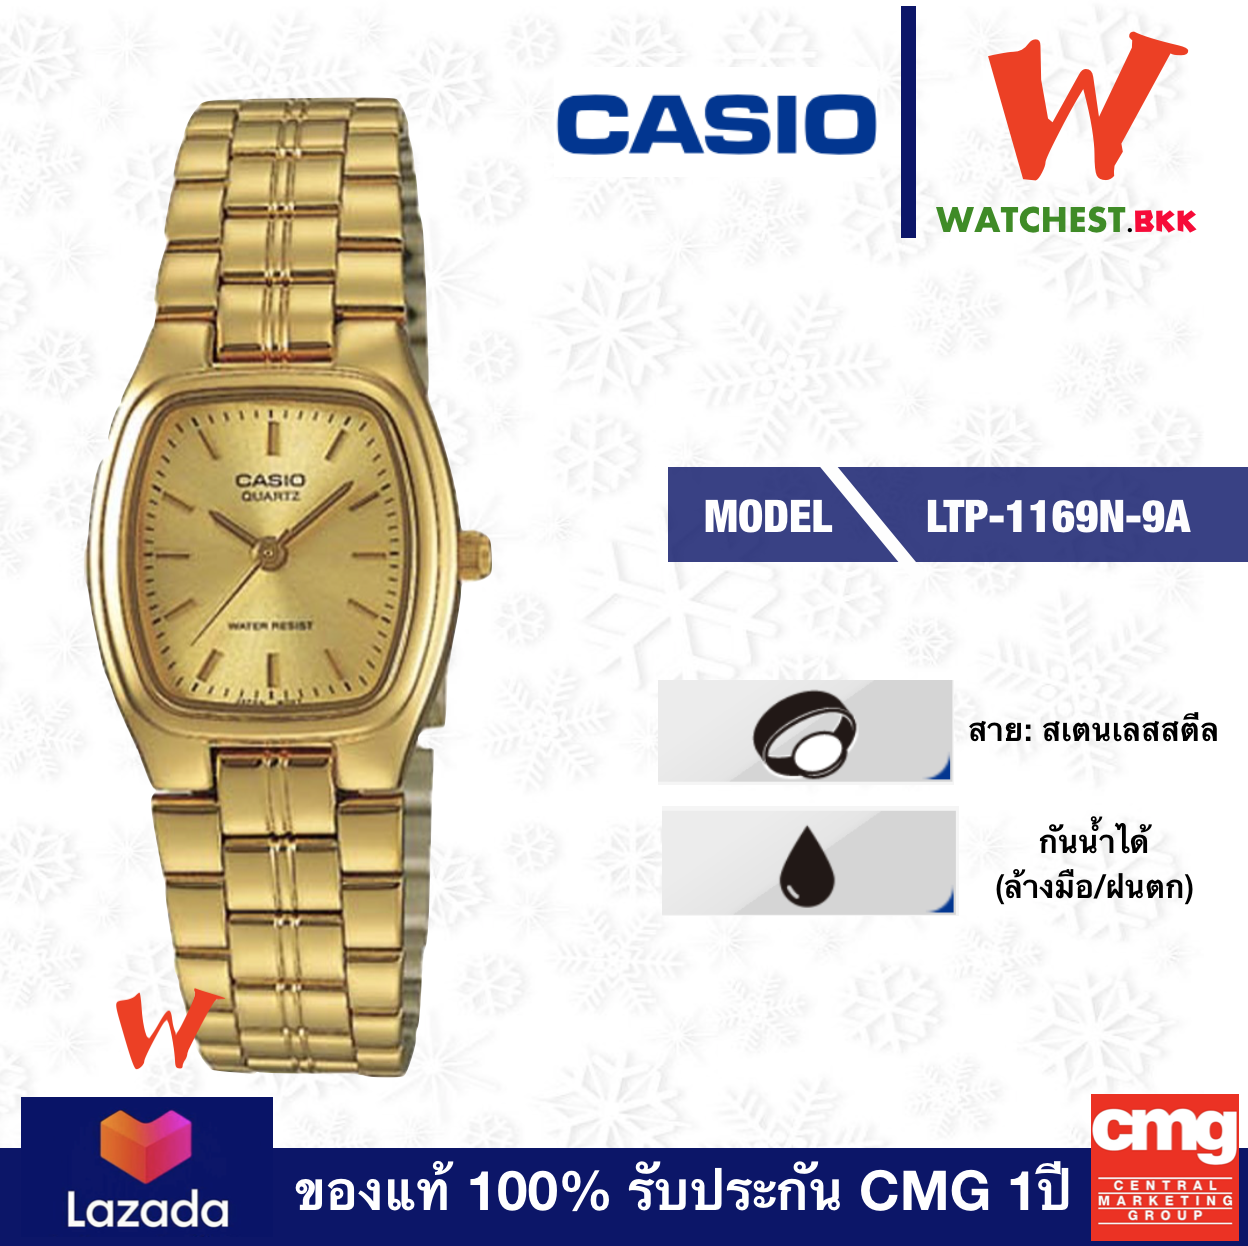 casio นาฬิกาผู้หญิง สายสเตนเลสทอง รุ่น LTP-1169N-9A, คาสิโอ LTP1169, LTP-1169 สายเหล็ก สีทอง ตัวล็อกบานพับ (watchestbkk คาสิโอ แท้ ของแท้100% ประกัน CMG)